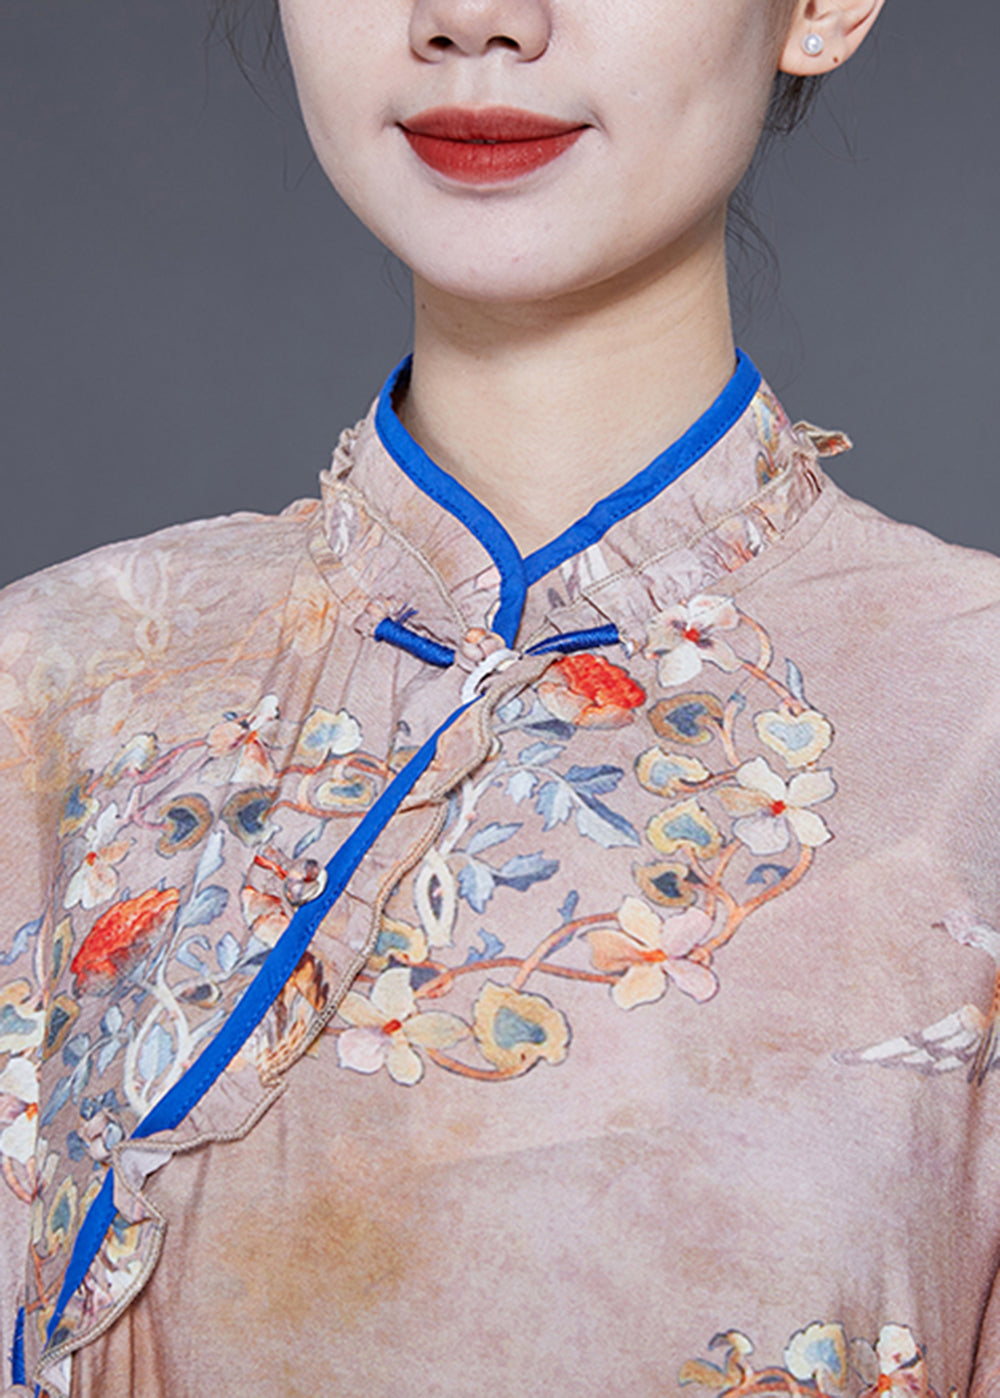 Chinese Style Khaki Ruffled Print Low High Design Cotton Dress Summer LY2348 - fabuloryshop